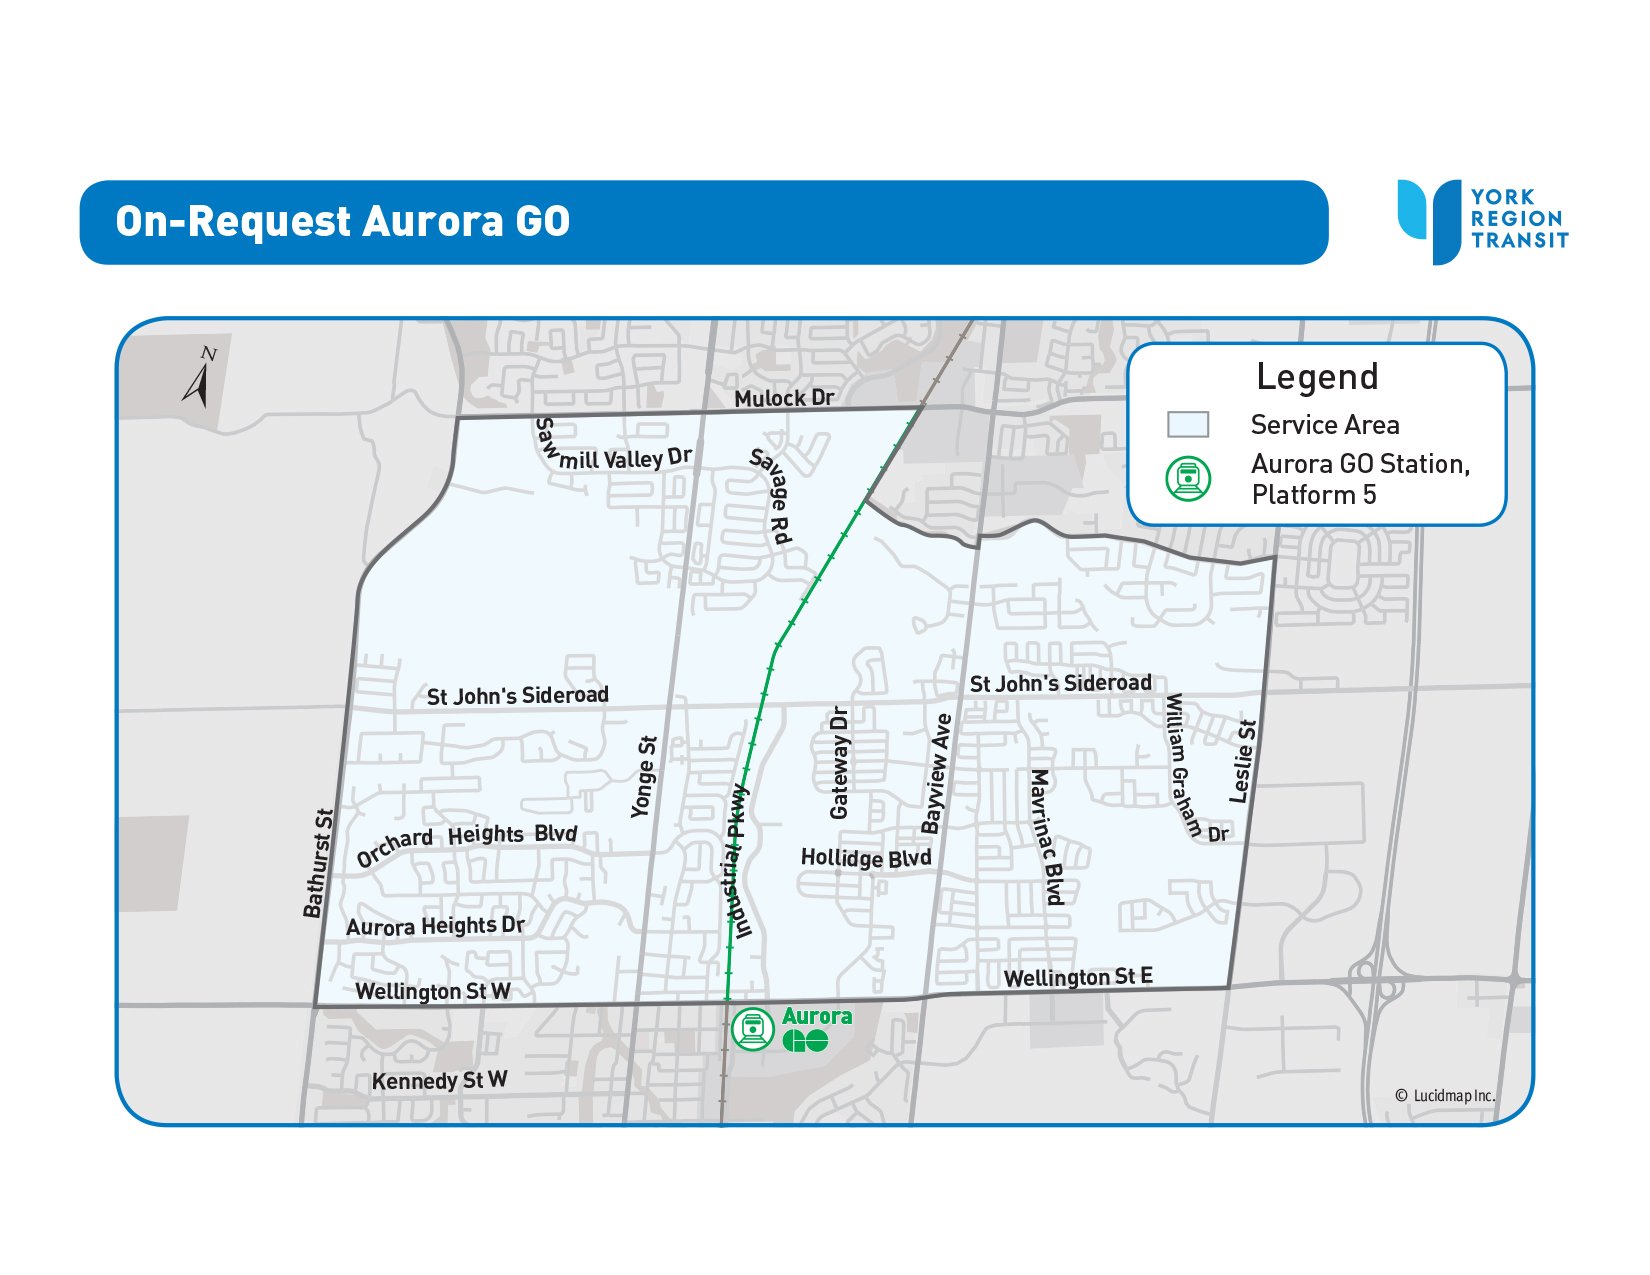 On-Request Aurora GO Service Area Map